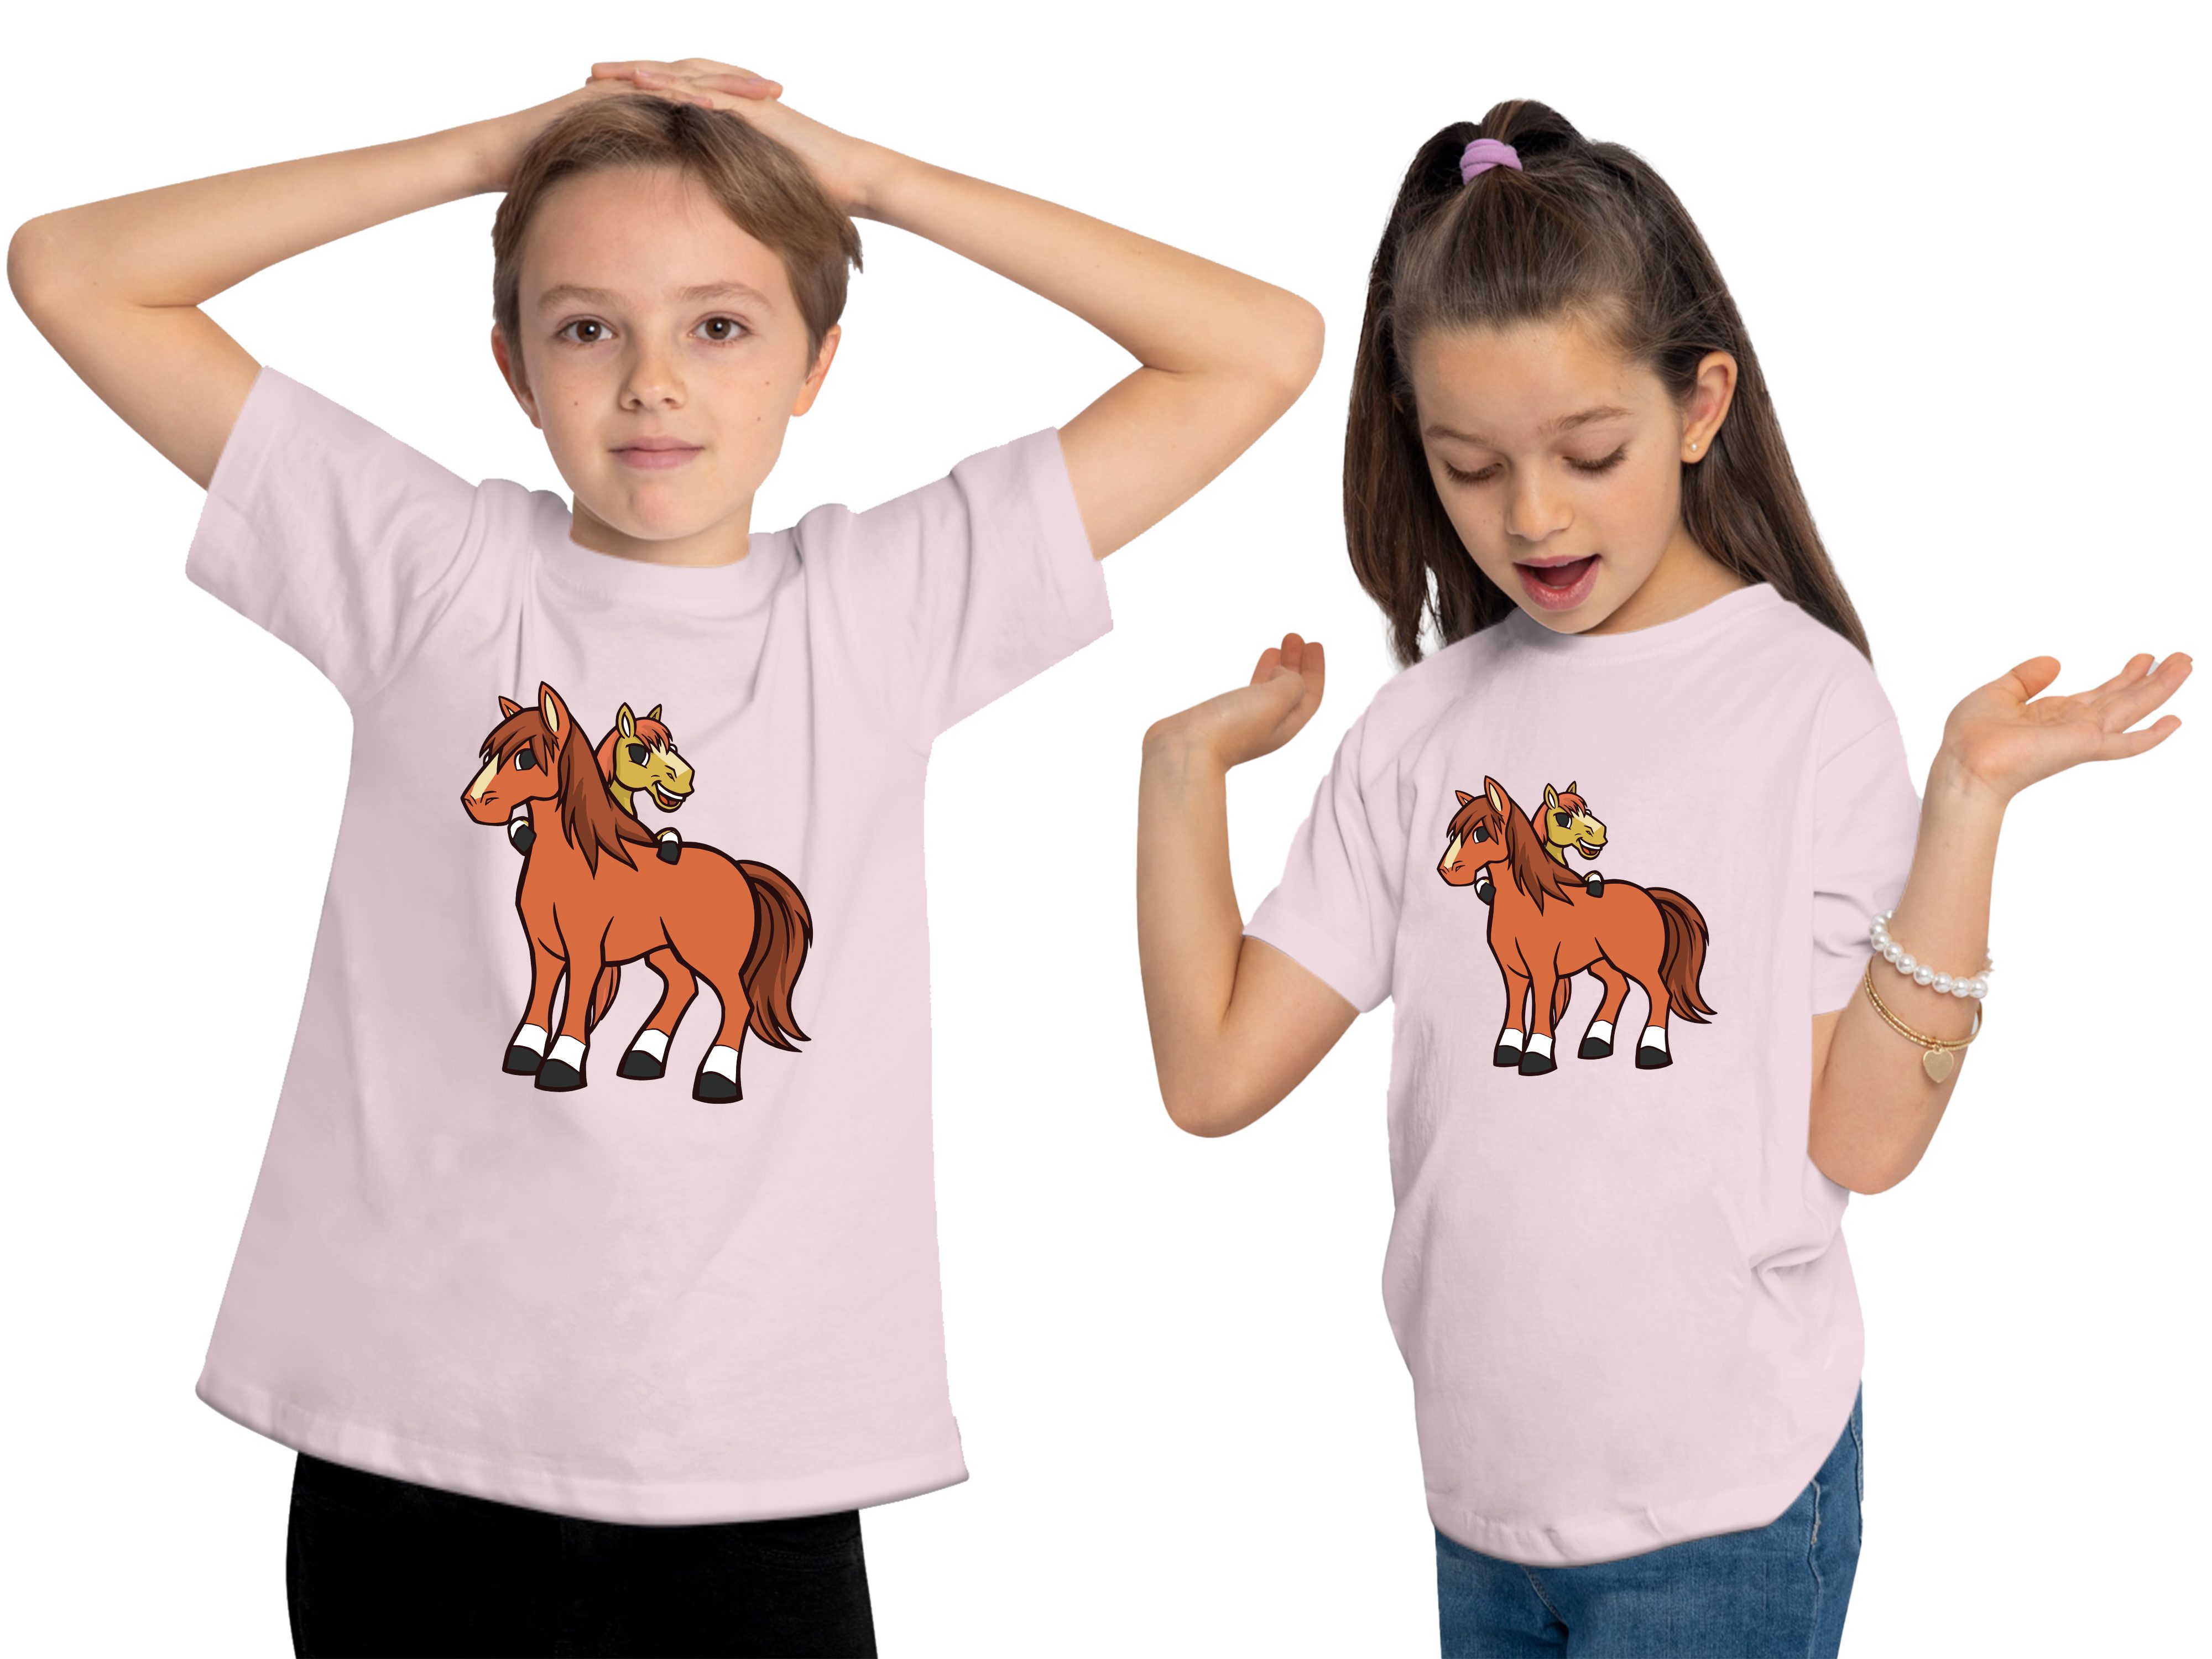 MyDesign24 T-Shirt Kinder rosa Baumwollshirt cartoon Aufdruck, - bedruckt i251 Pferde mit Print Pferde 2 Shirt